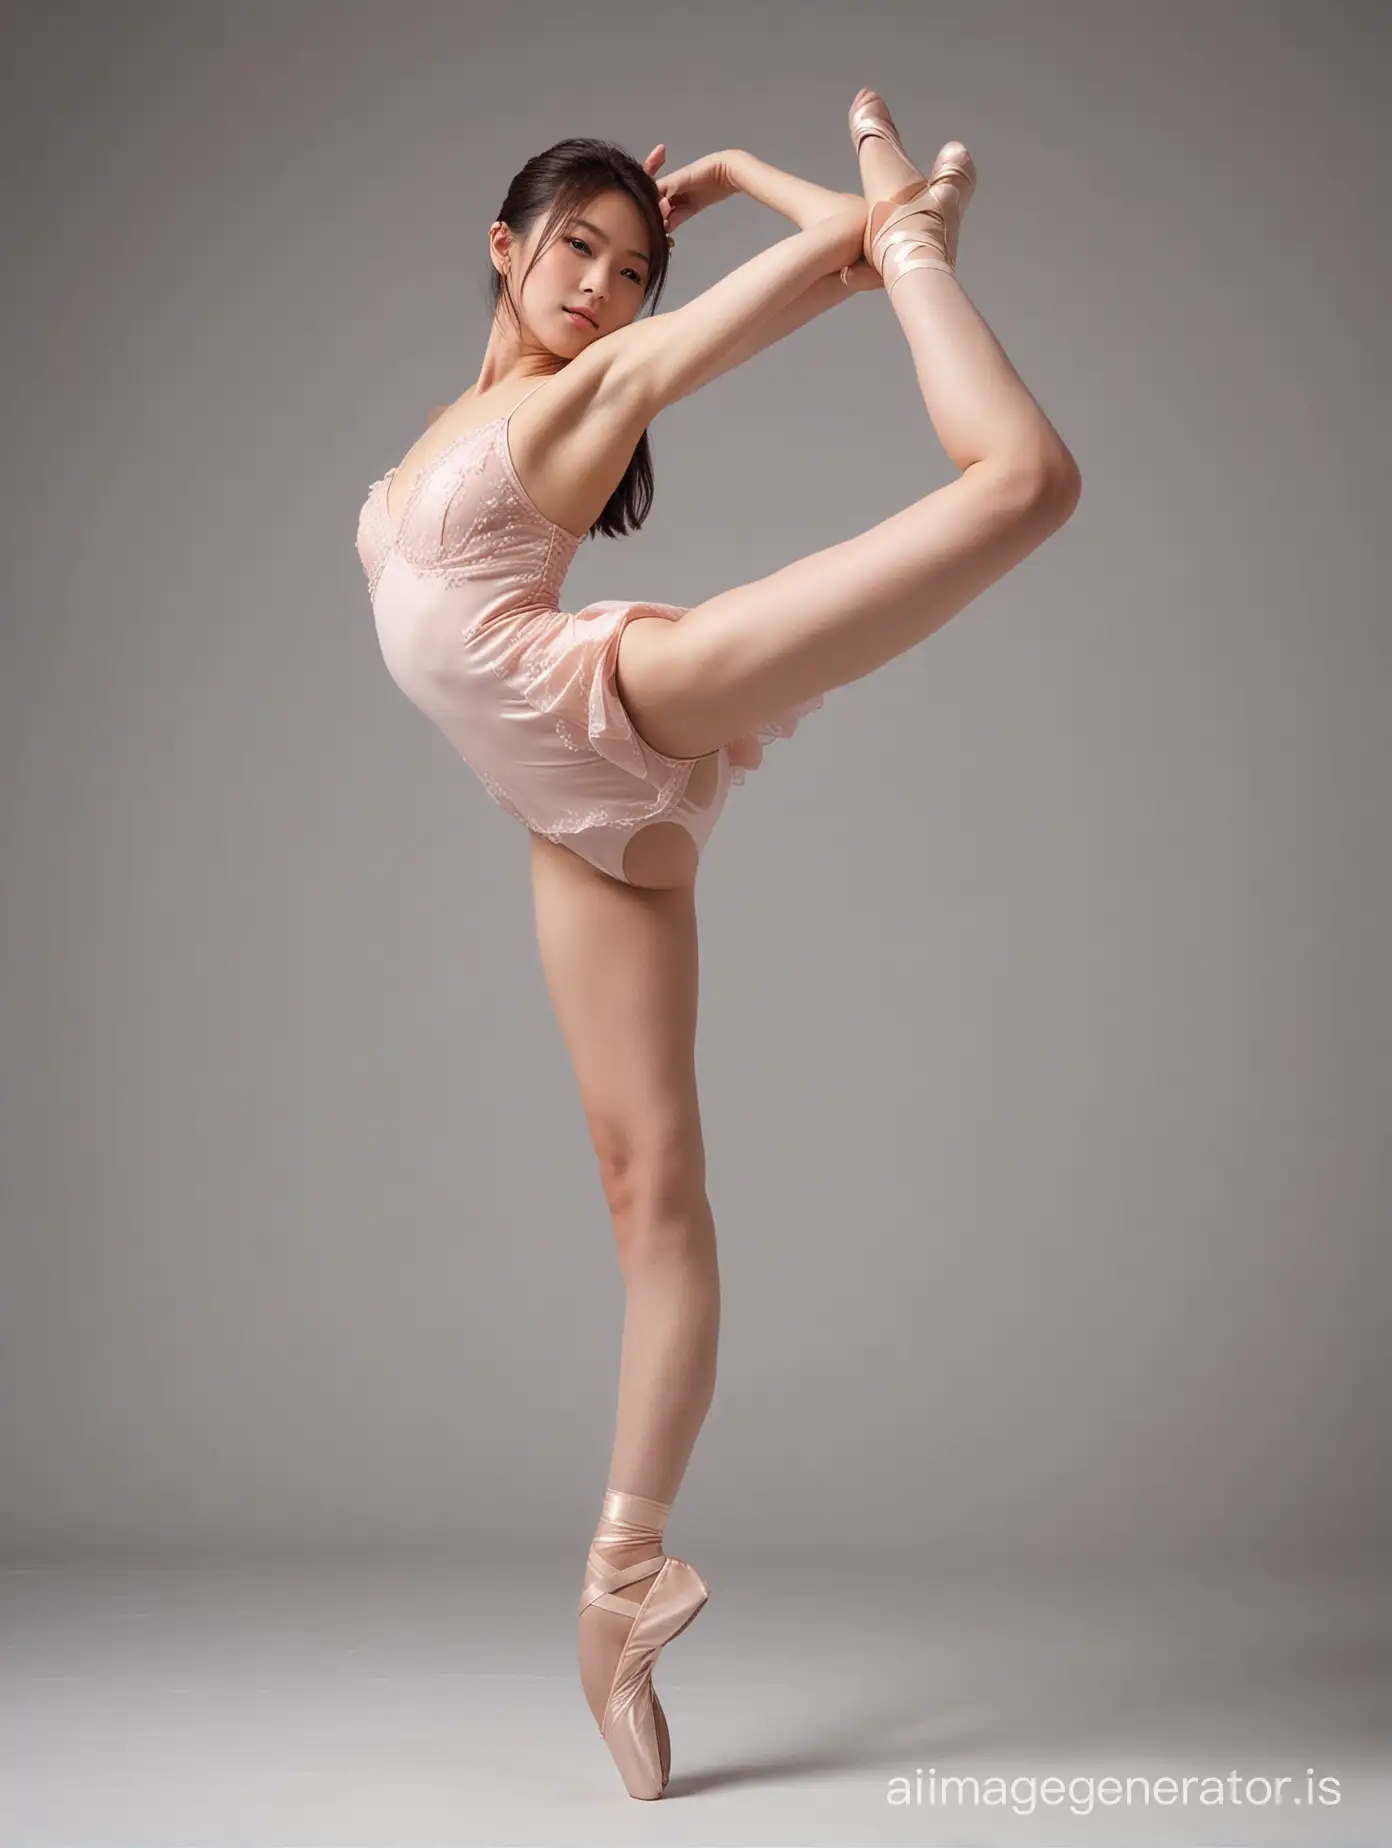 Japanese beautiful girl, whole body, photo studio, nude art photo, high definition, lifting legs, ballet dancing